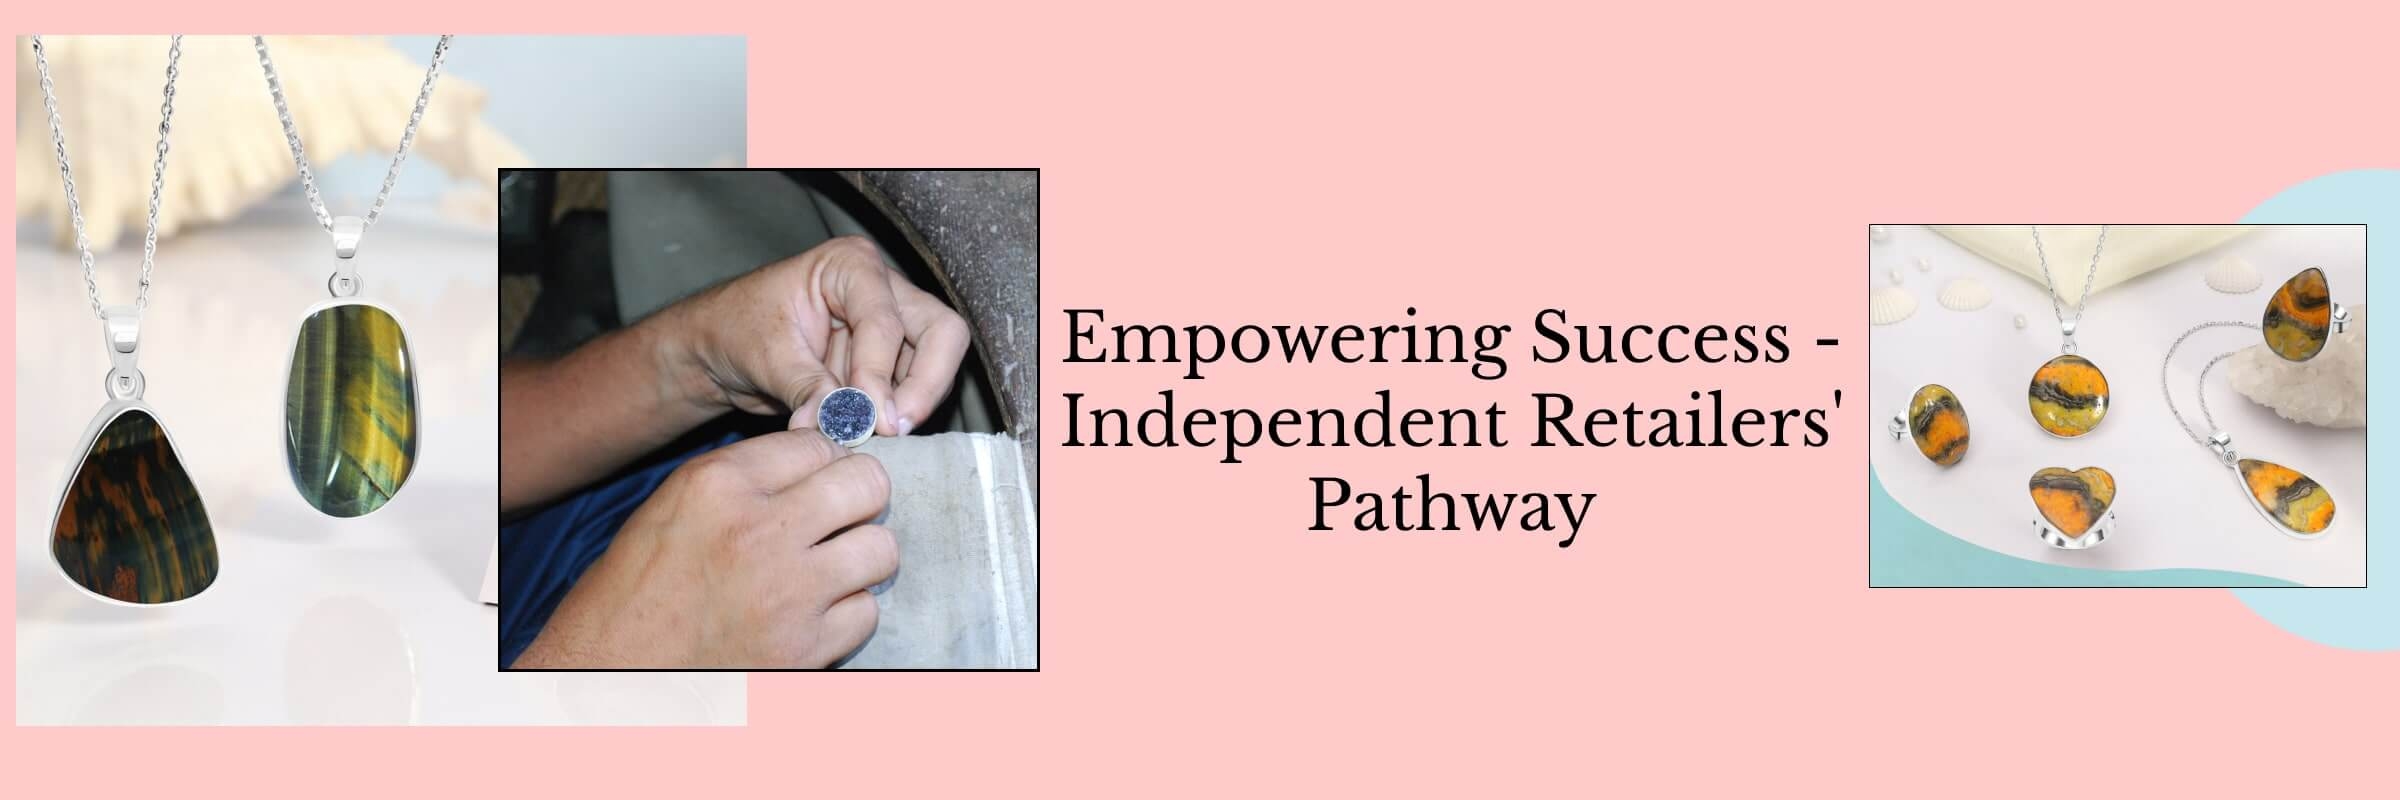 Empowering Independent Retailers